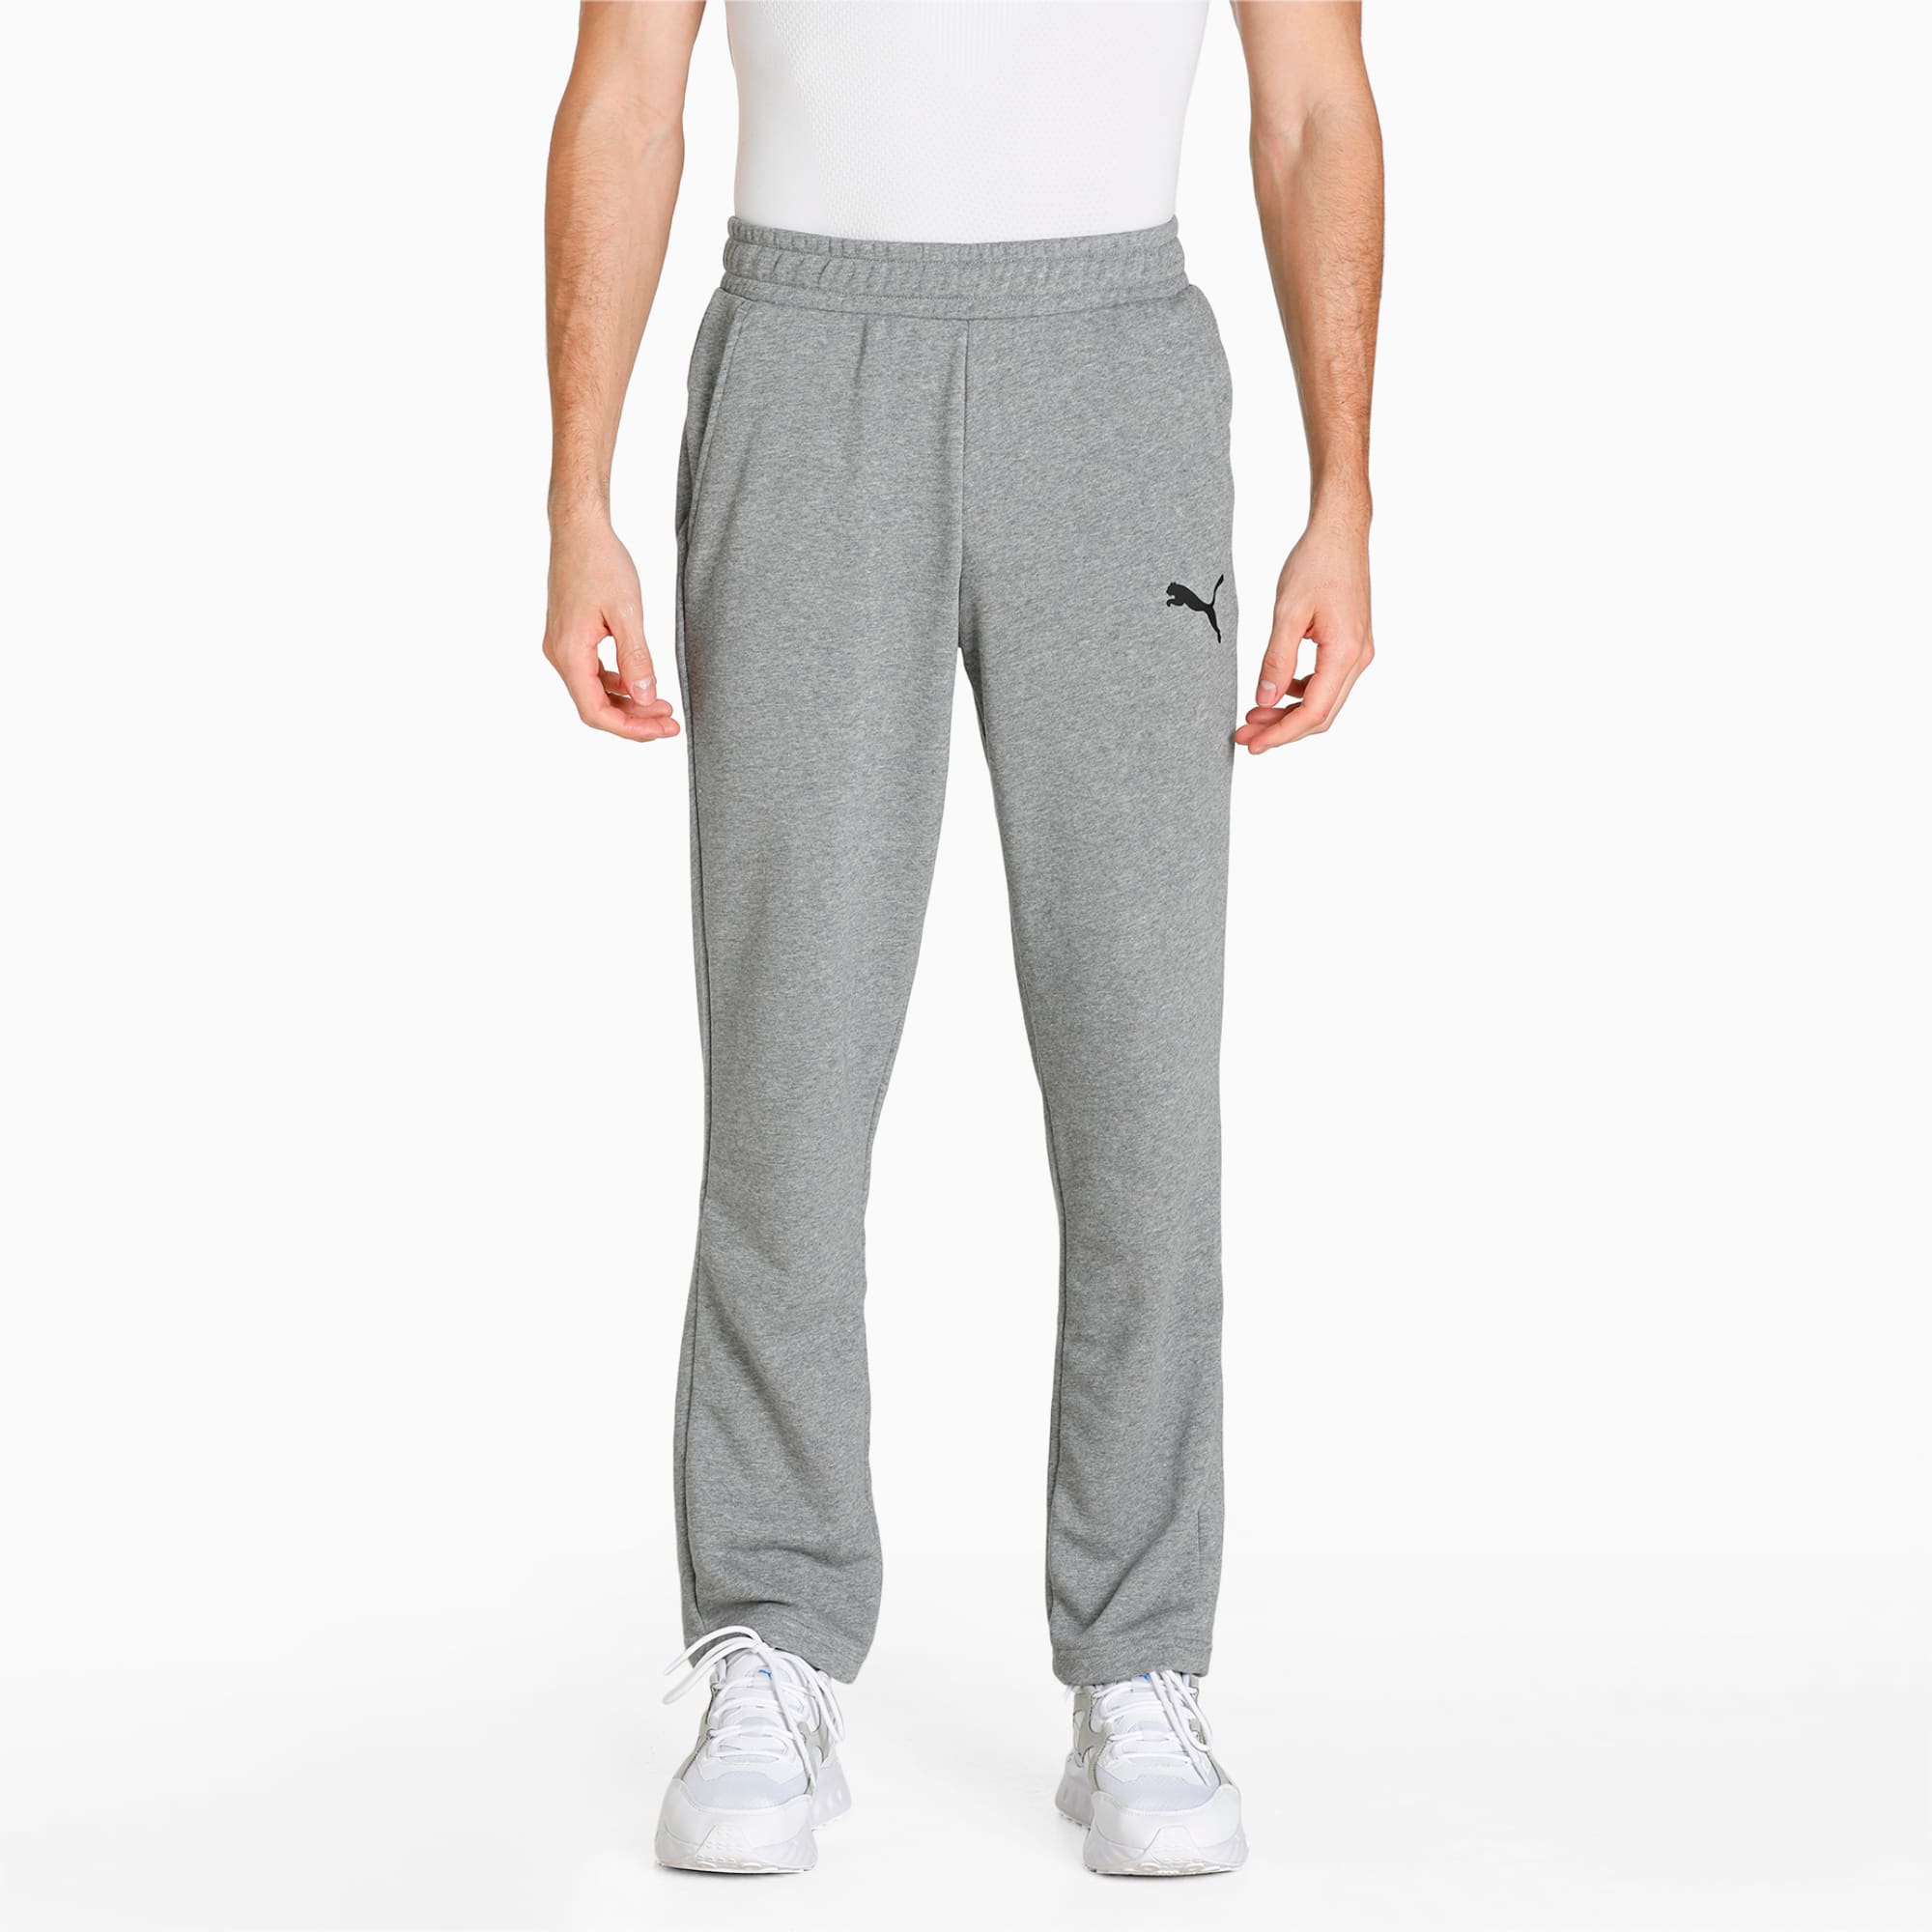 PUMA Essentials Logo Men's Sweatpants, Medium Grey Heather, Size 4XL, Clothing